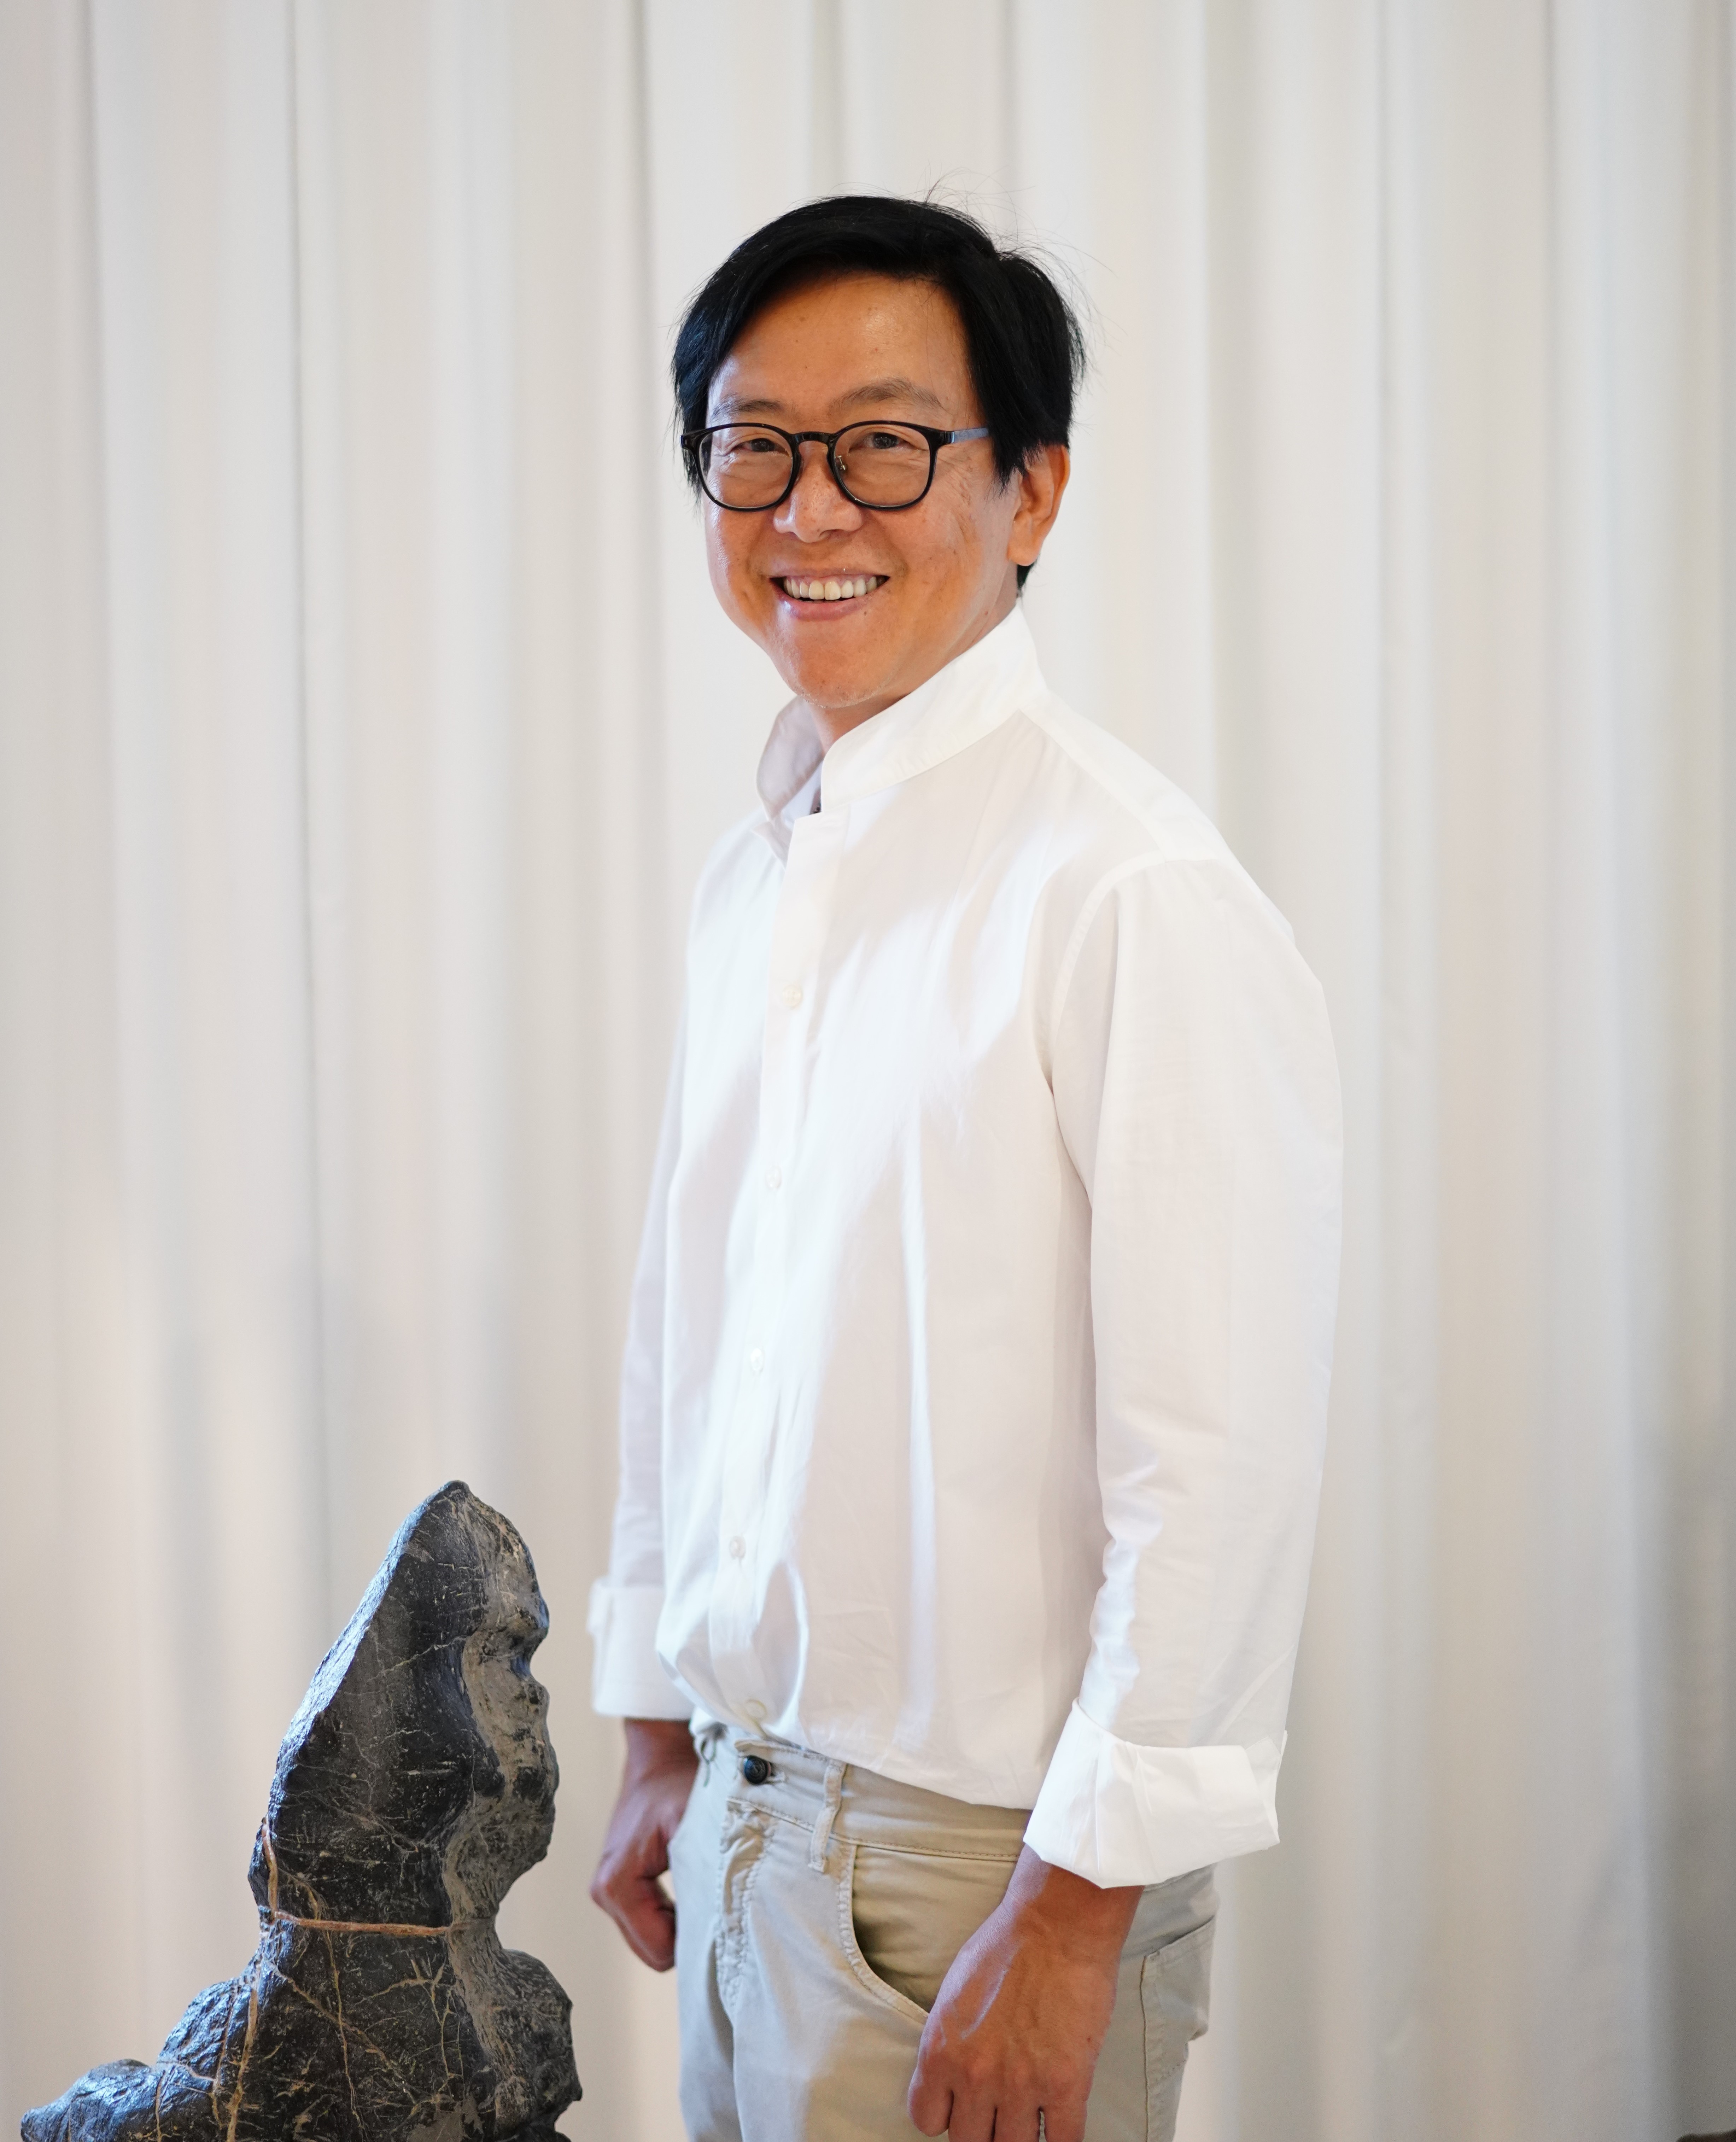 Architect and artist William Lim